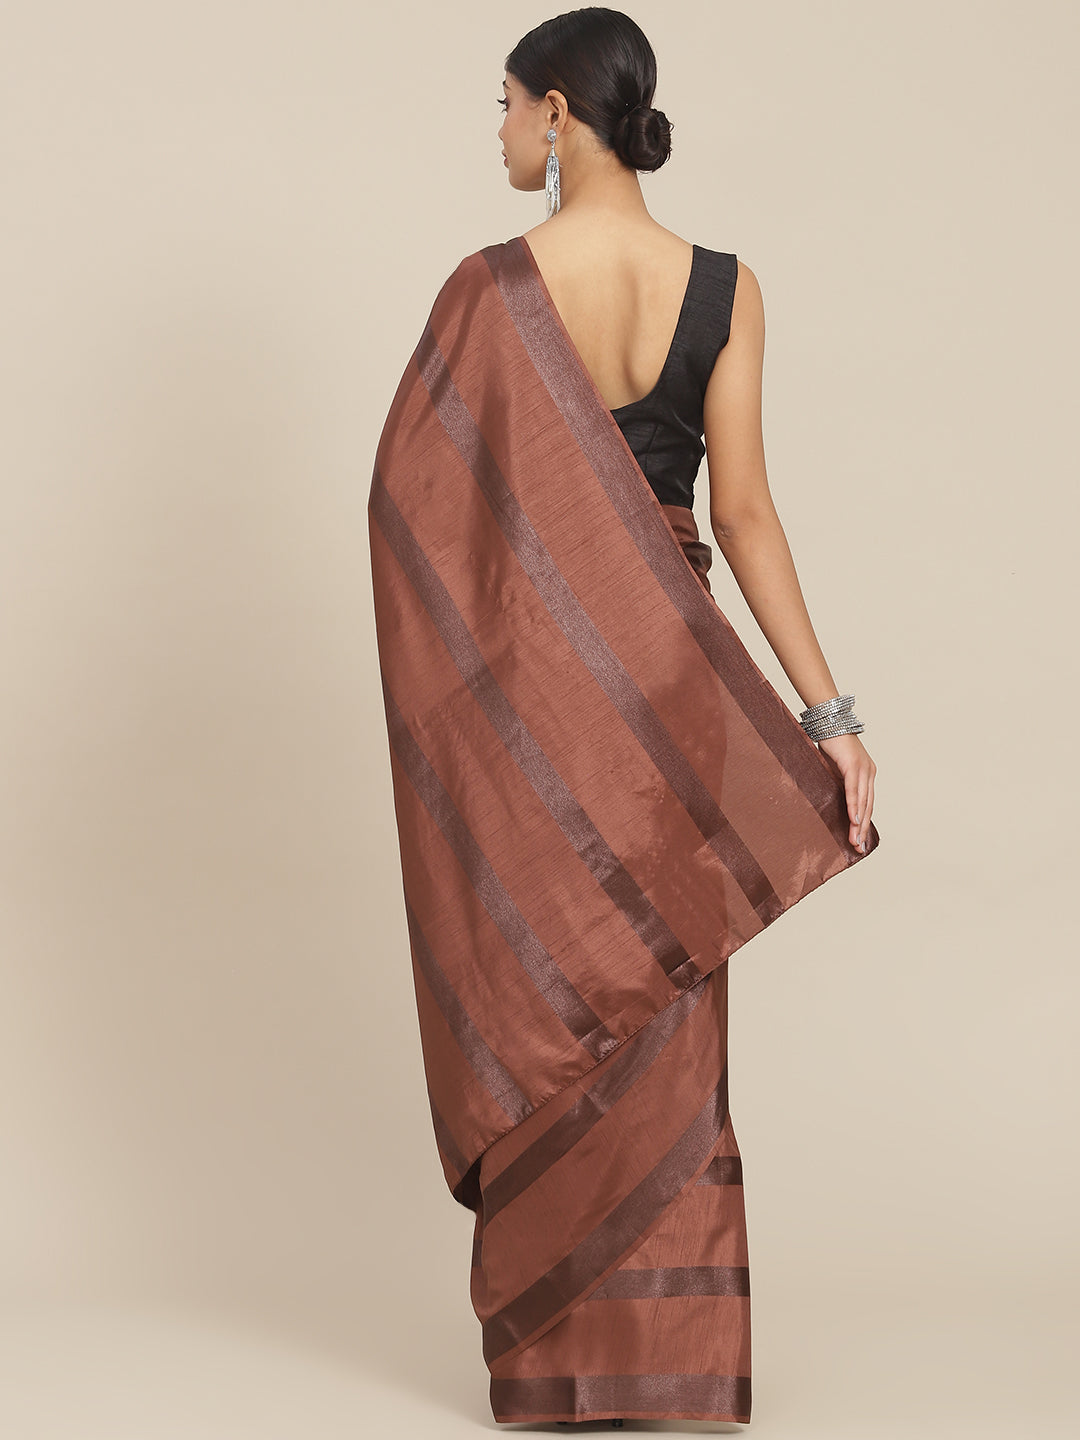 Ishin Women's Silk Blend Brown Striped Saree With Blouse Piece